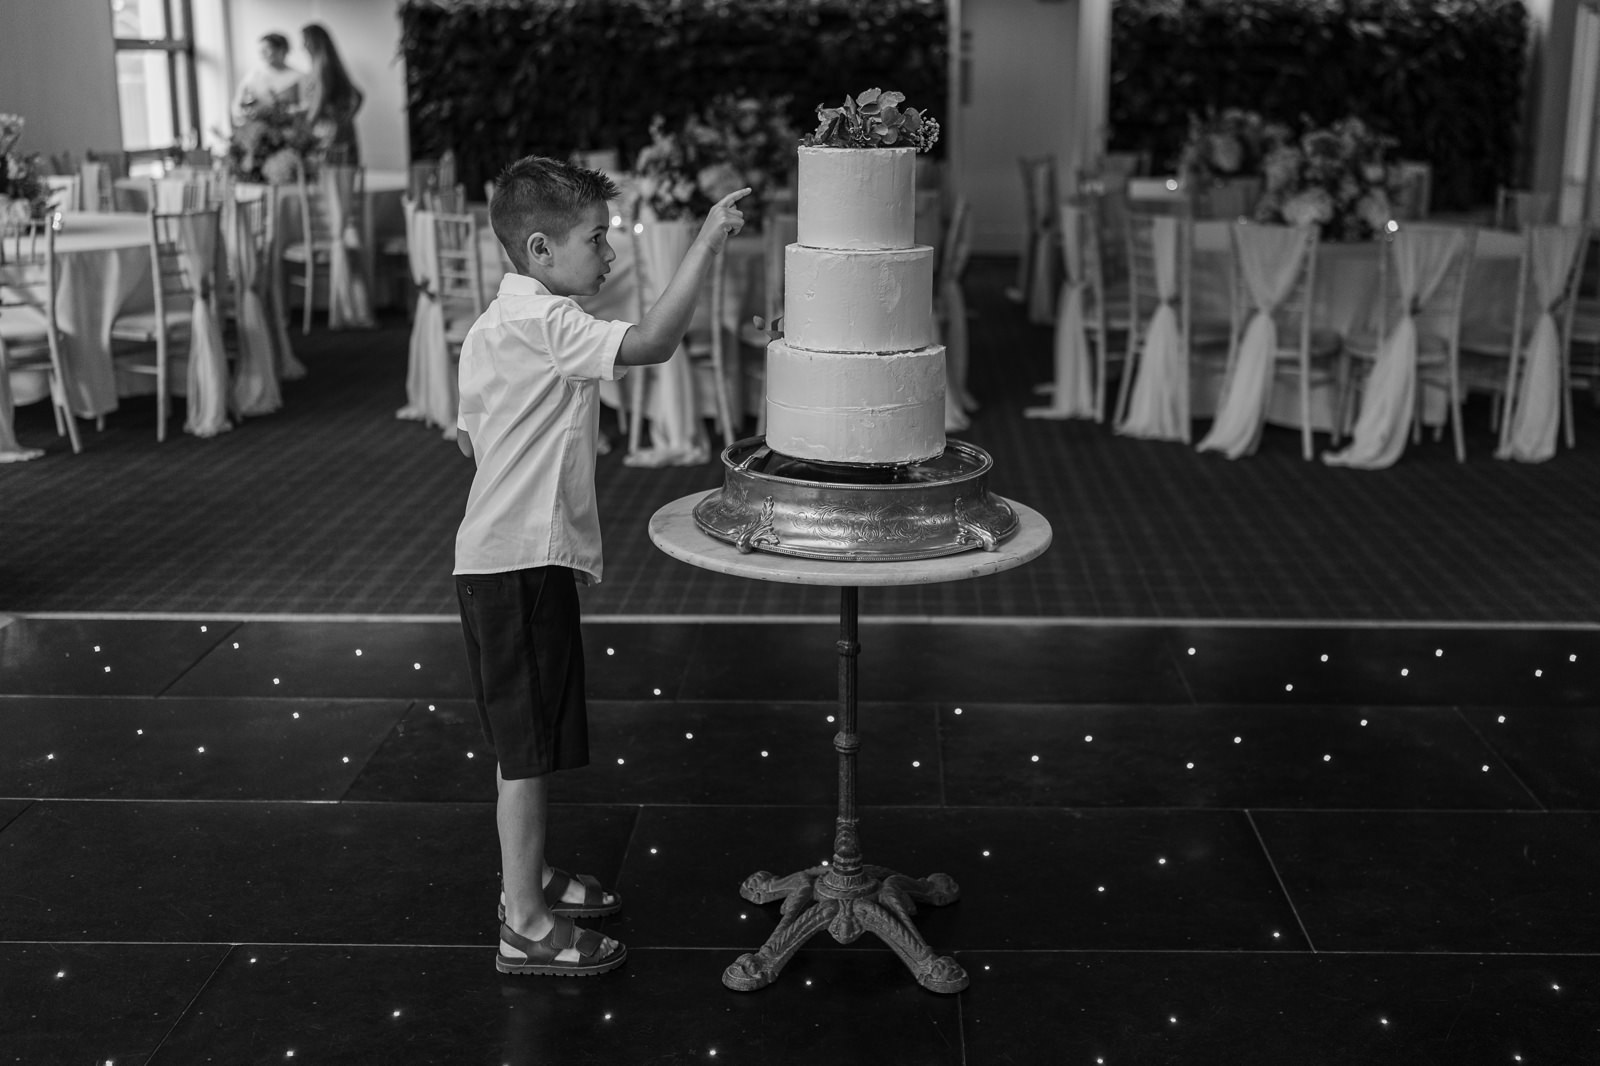 Boy pokes wedding cake